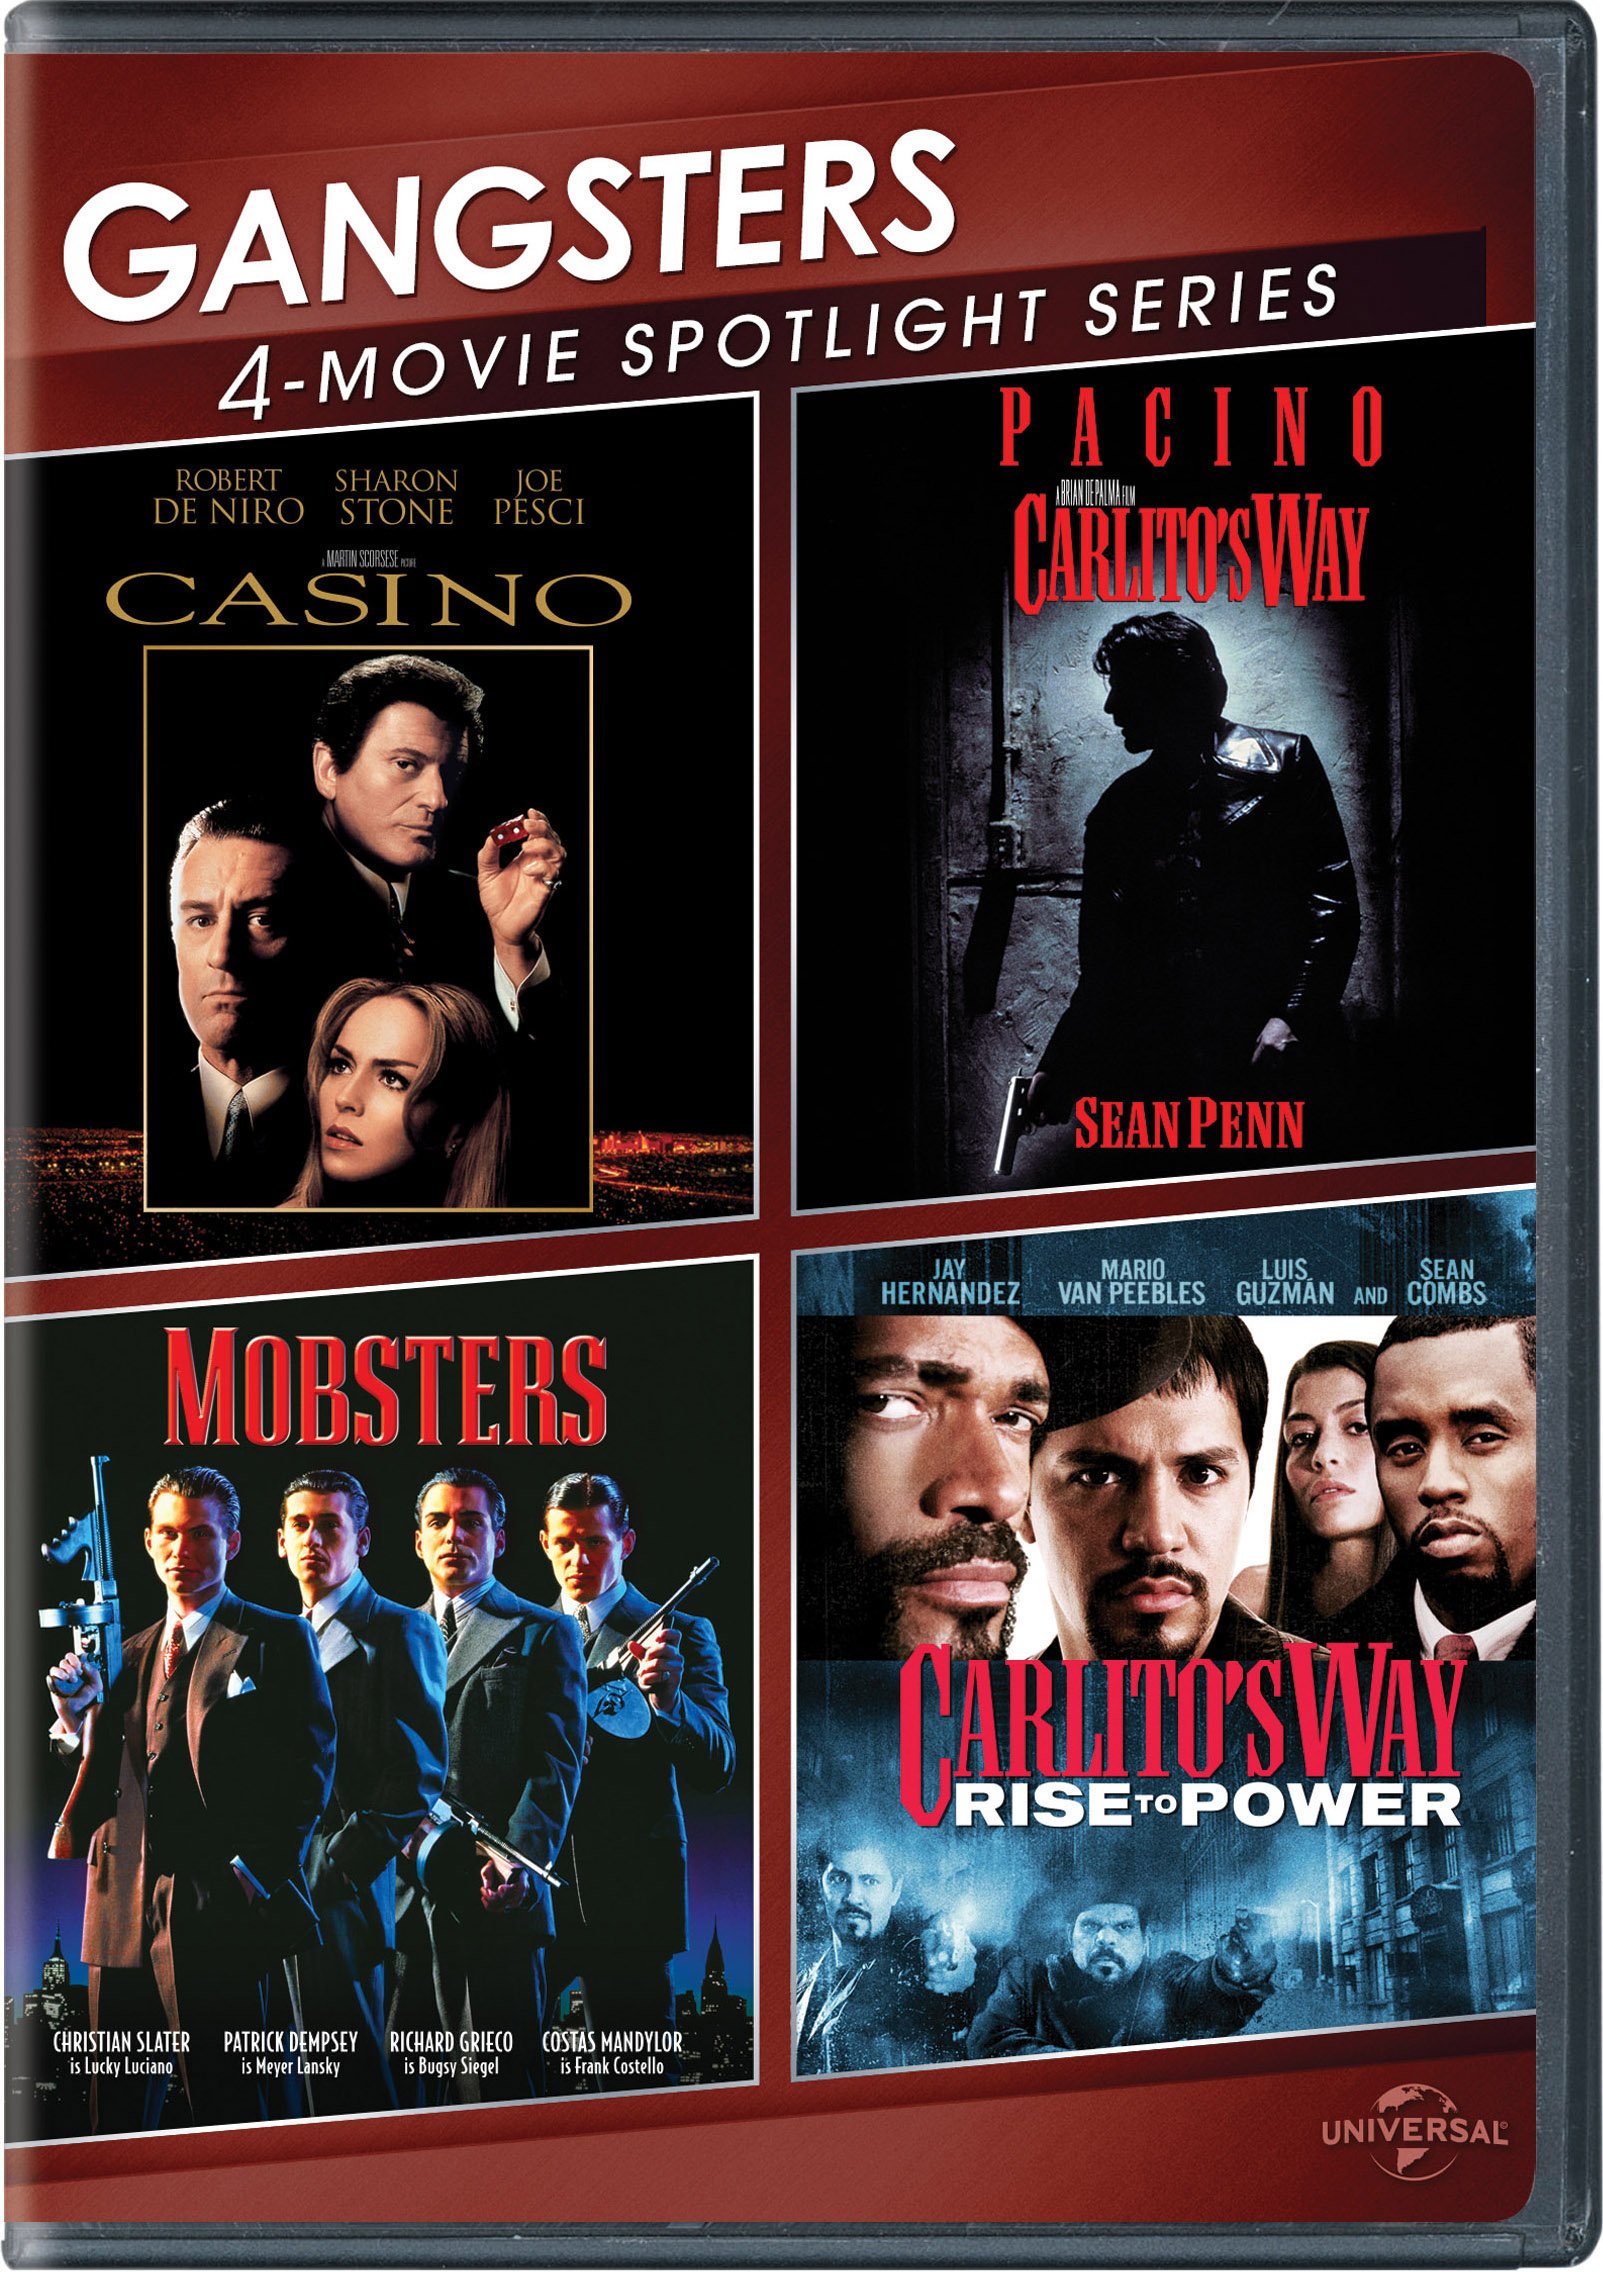 Gangsters 4-Movie Spotlight Series on MovieShack